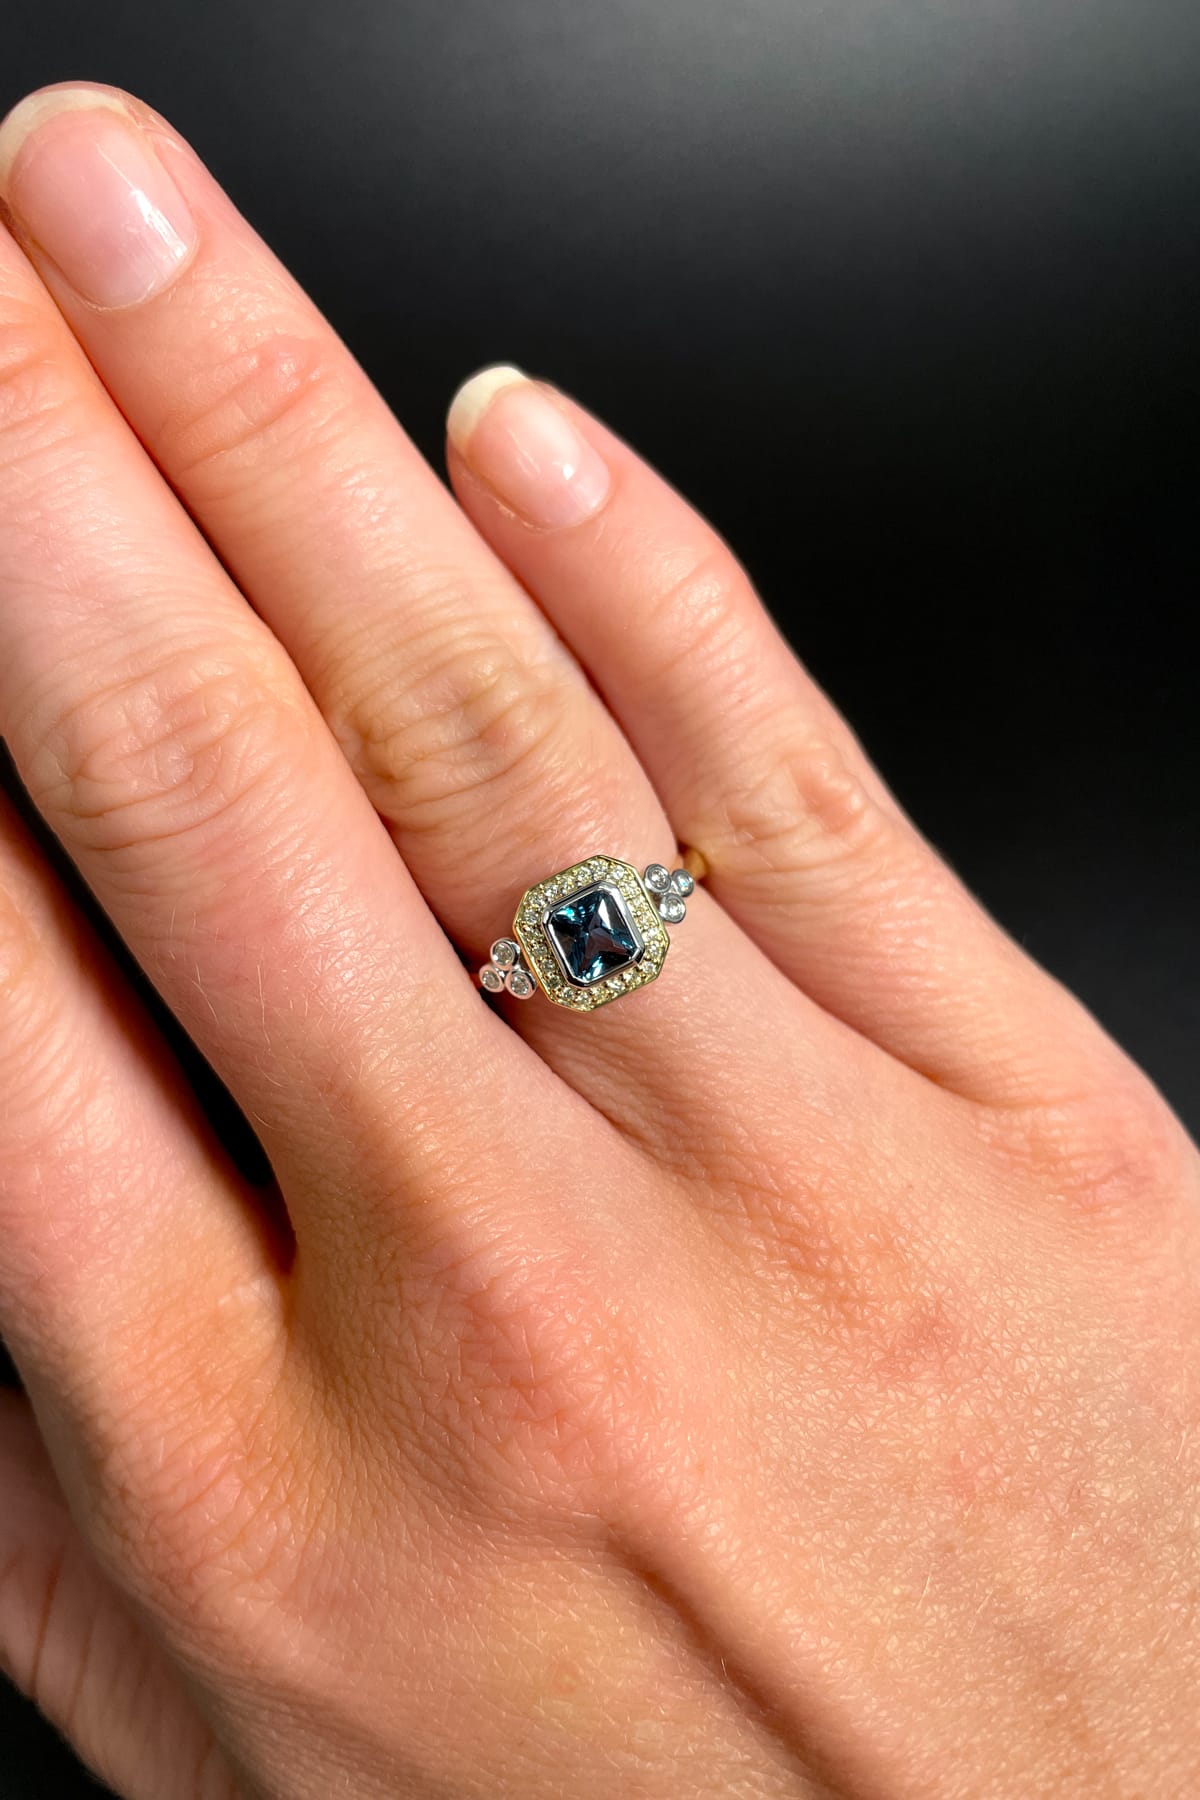 9ct Gold 0.63ct London Blue Octagonal Topaz Diamond Set Ring available at LeGassick Diamonds and Jewellery Gold Coast, Australia.